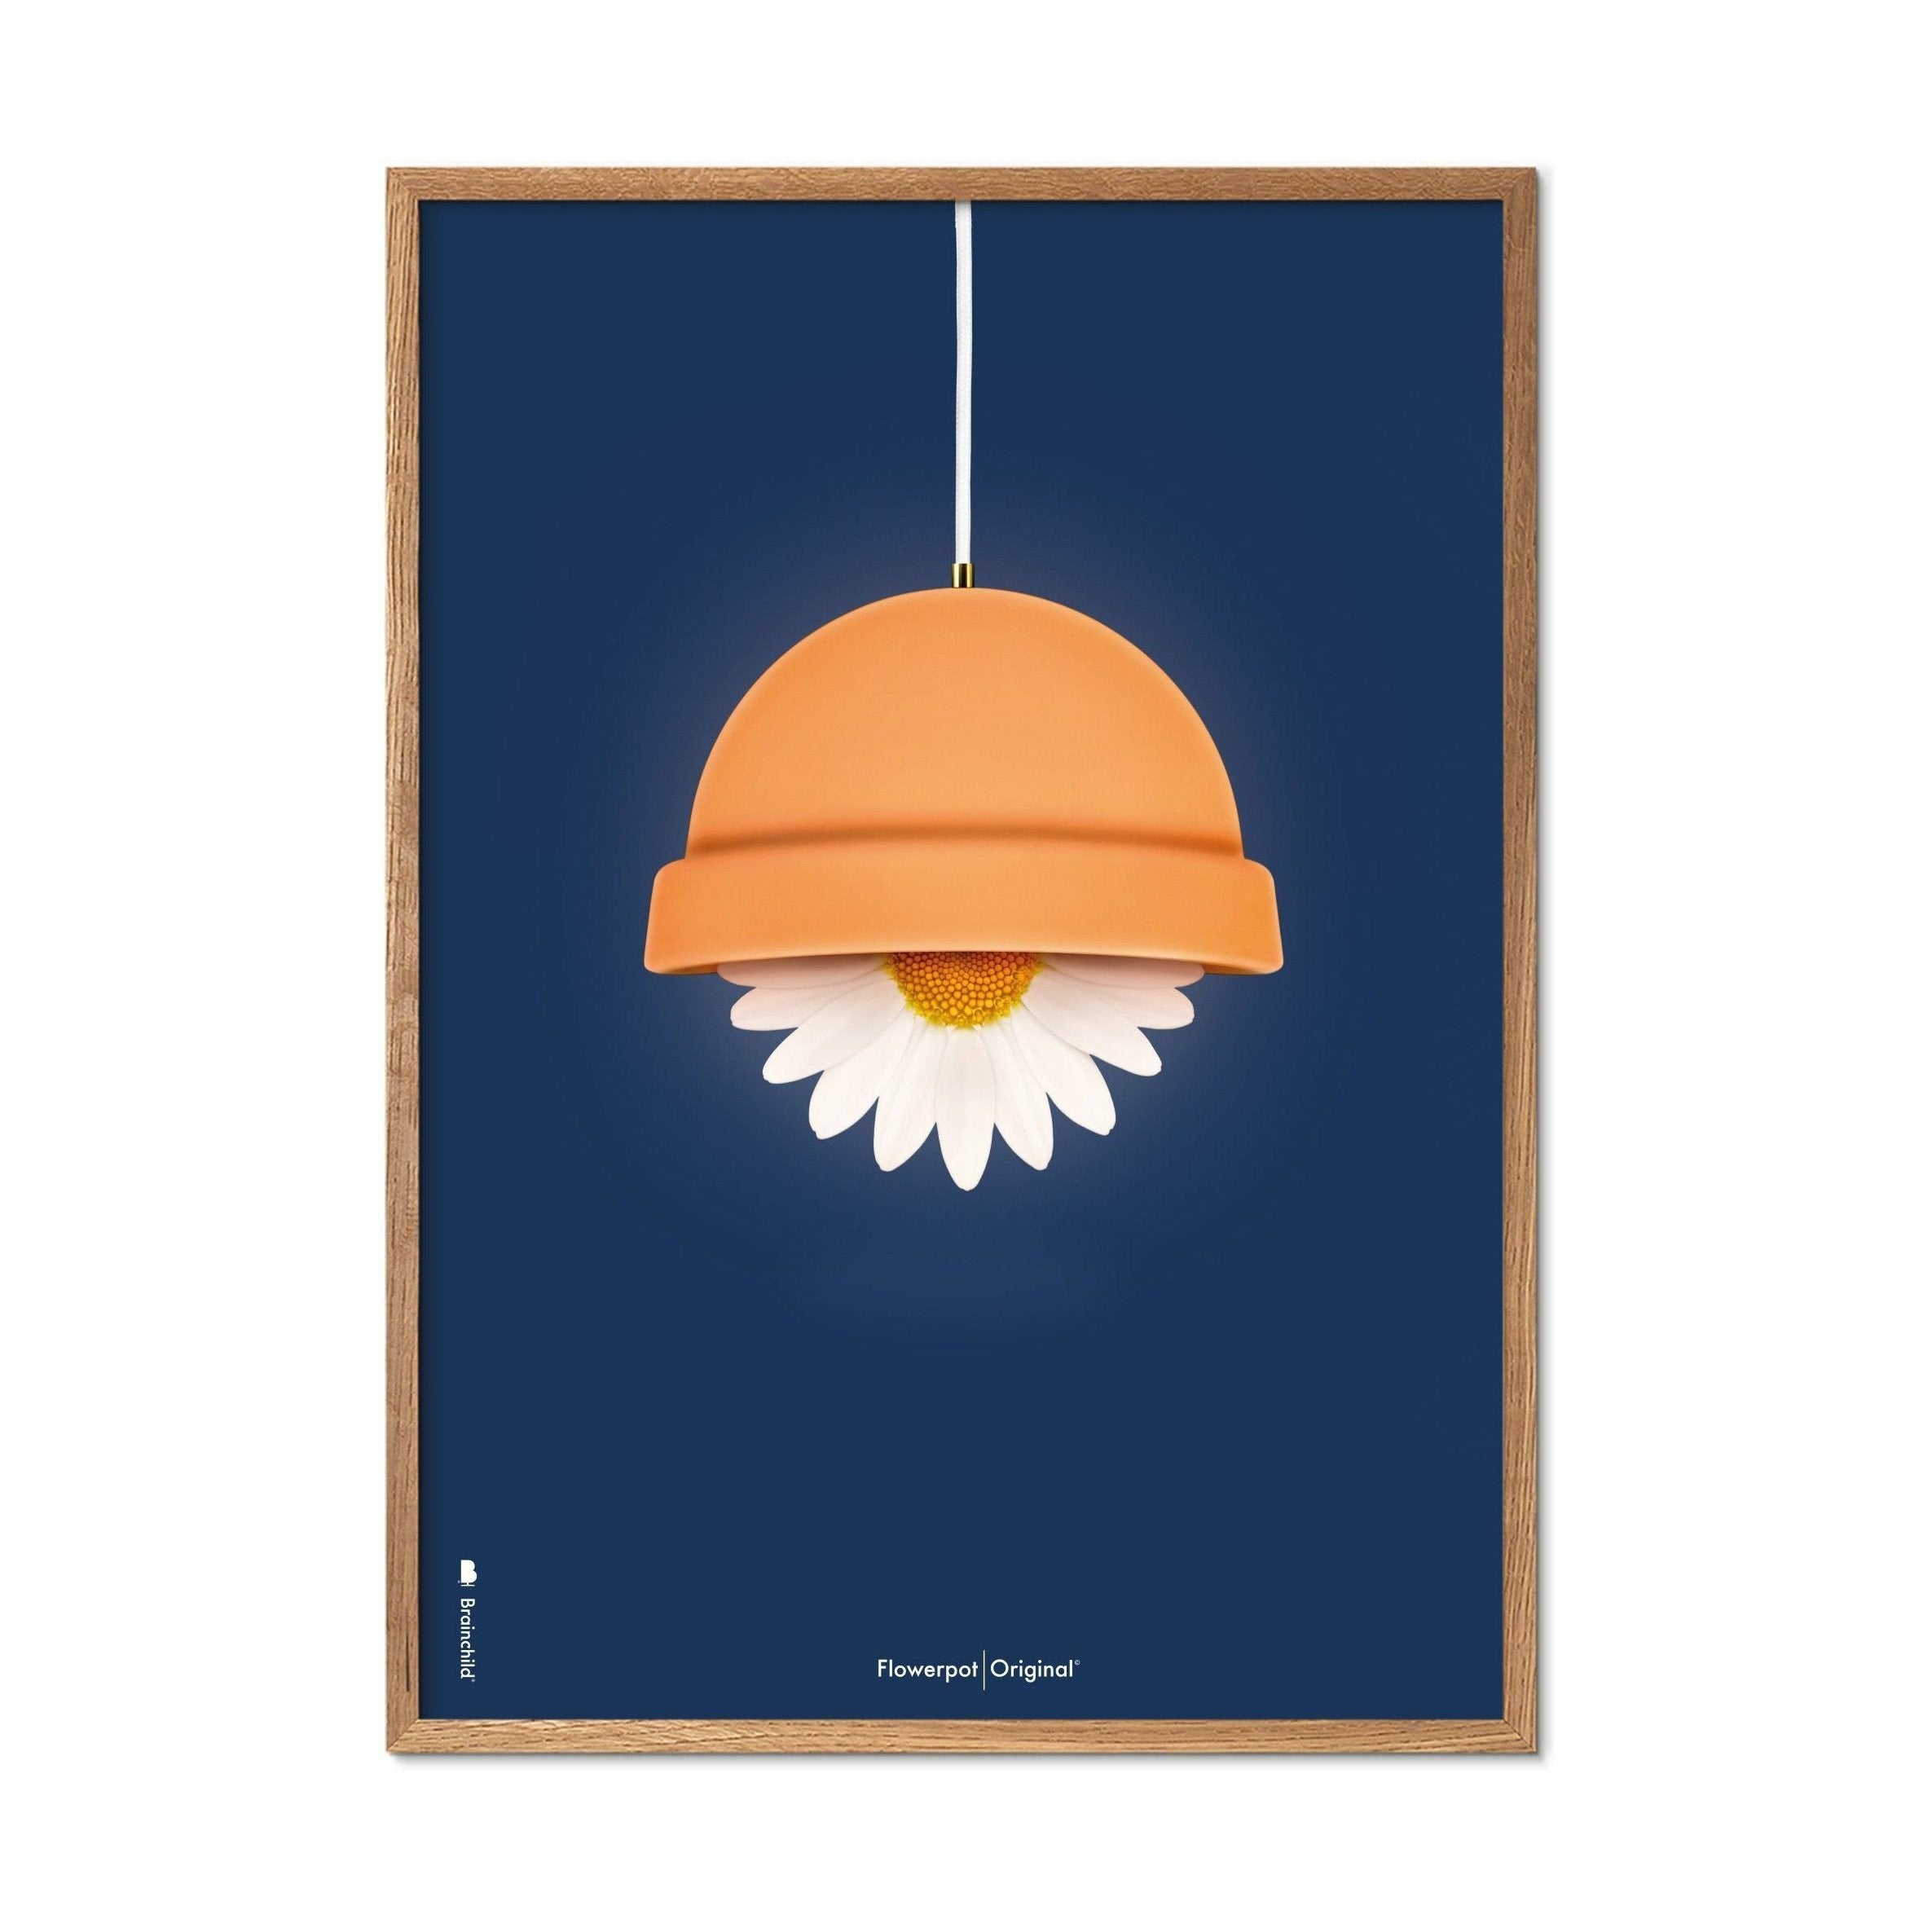 Brainchild Flowerpot Classic Poster, Frame Made Of Light Wood 30x40 Cm, Dark Blue Background